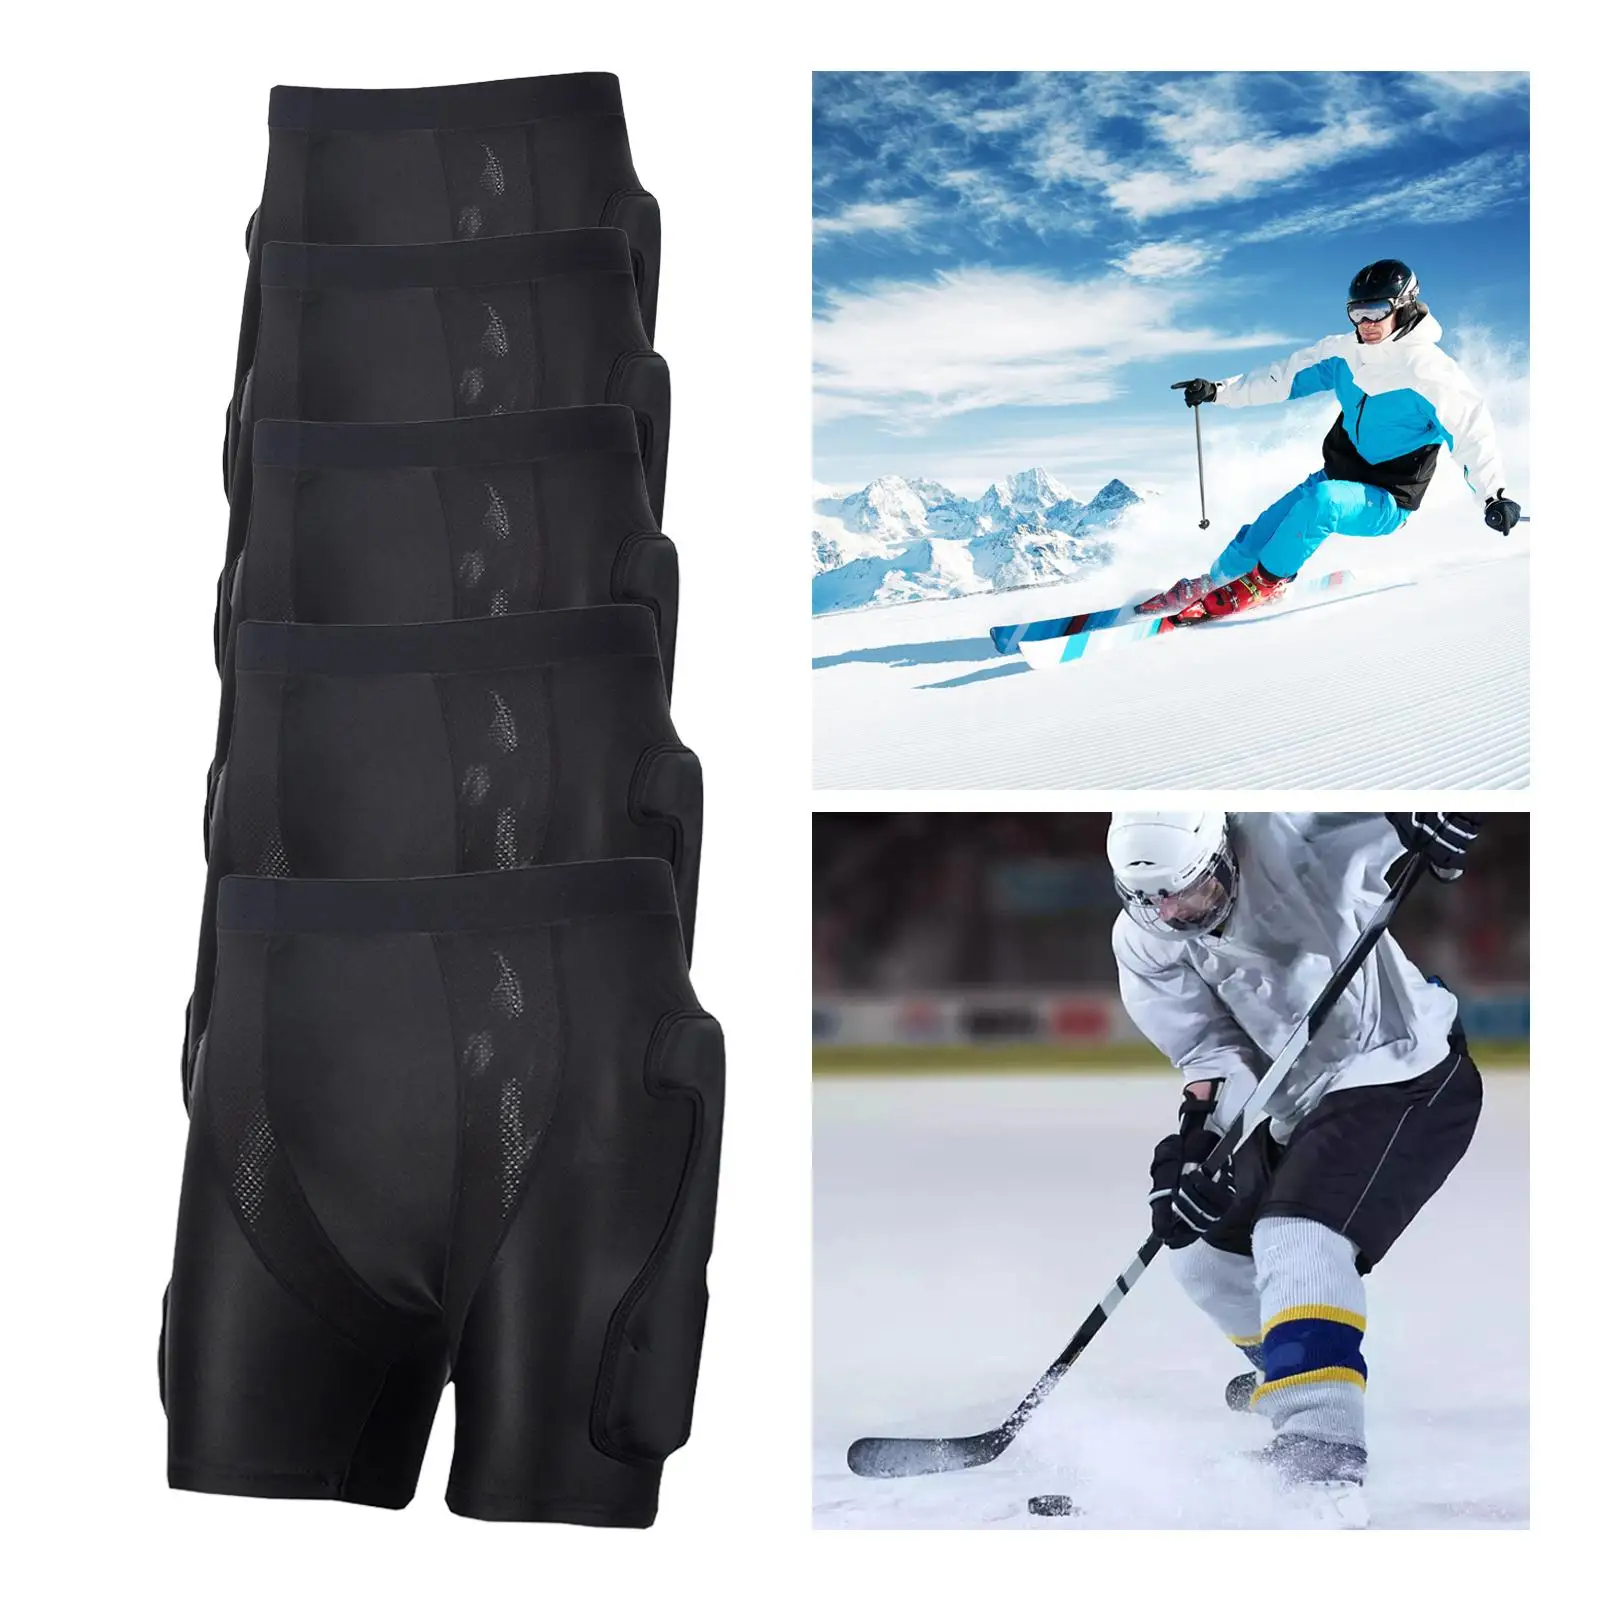 Protective Padded Shorts Skating Butt Pad Hip Protective Pants Pad for Winter Sports Riding Roller Skating Snowboard Unisex